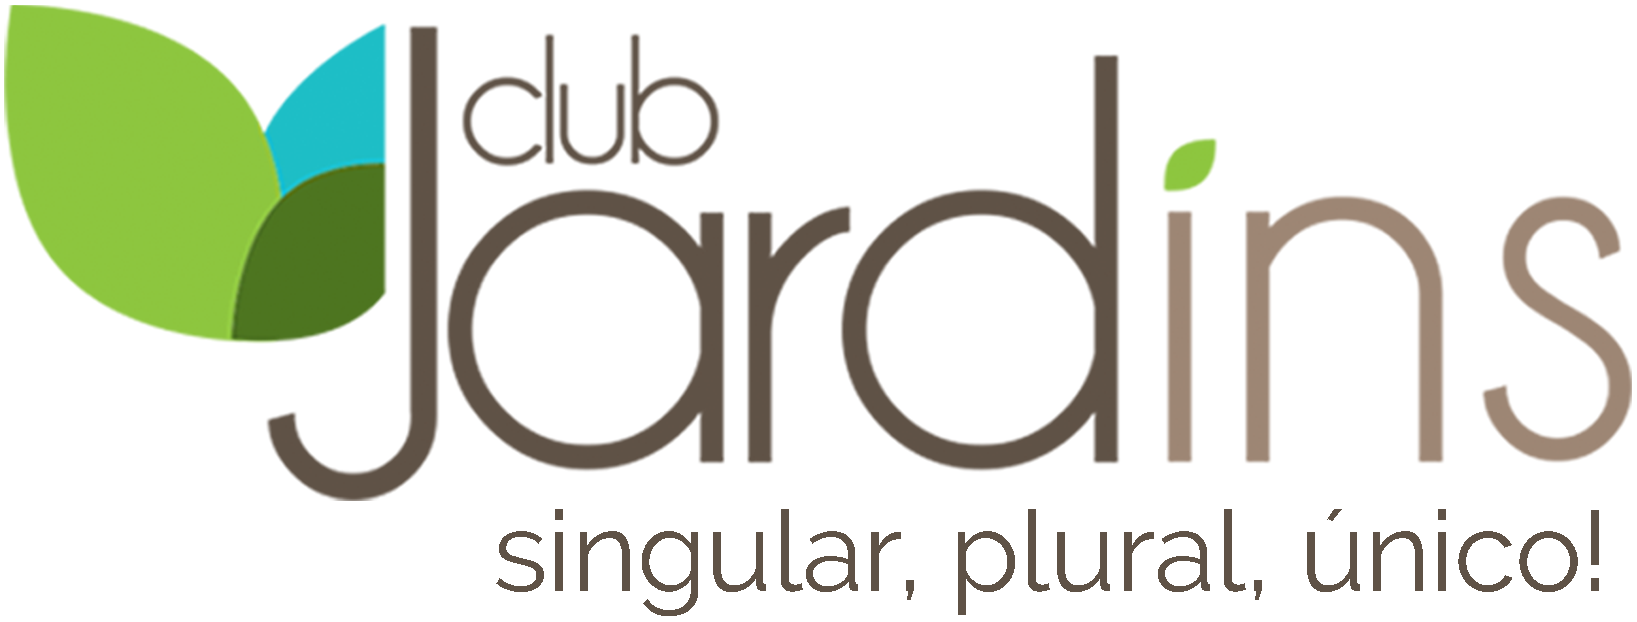 logo_club_jardins